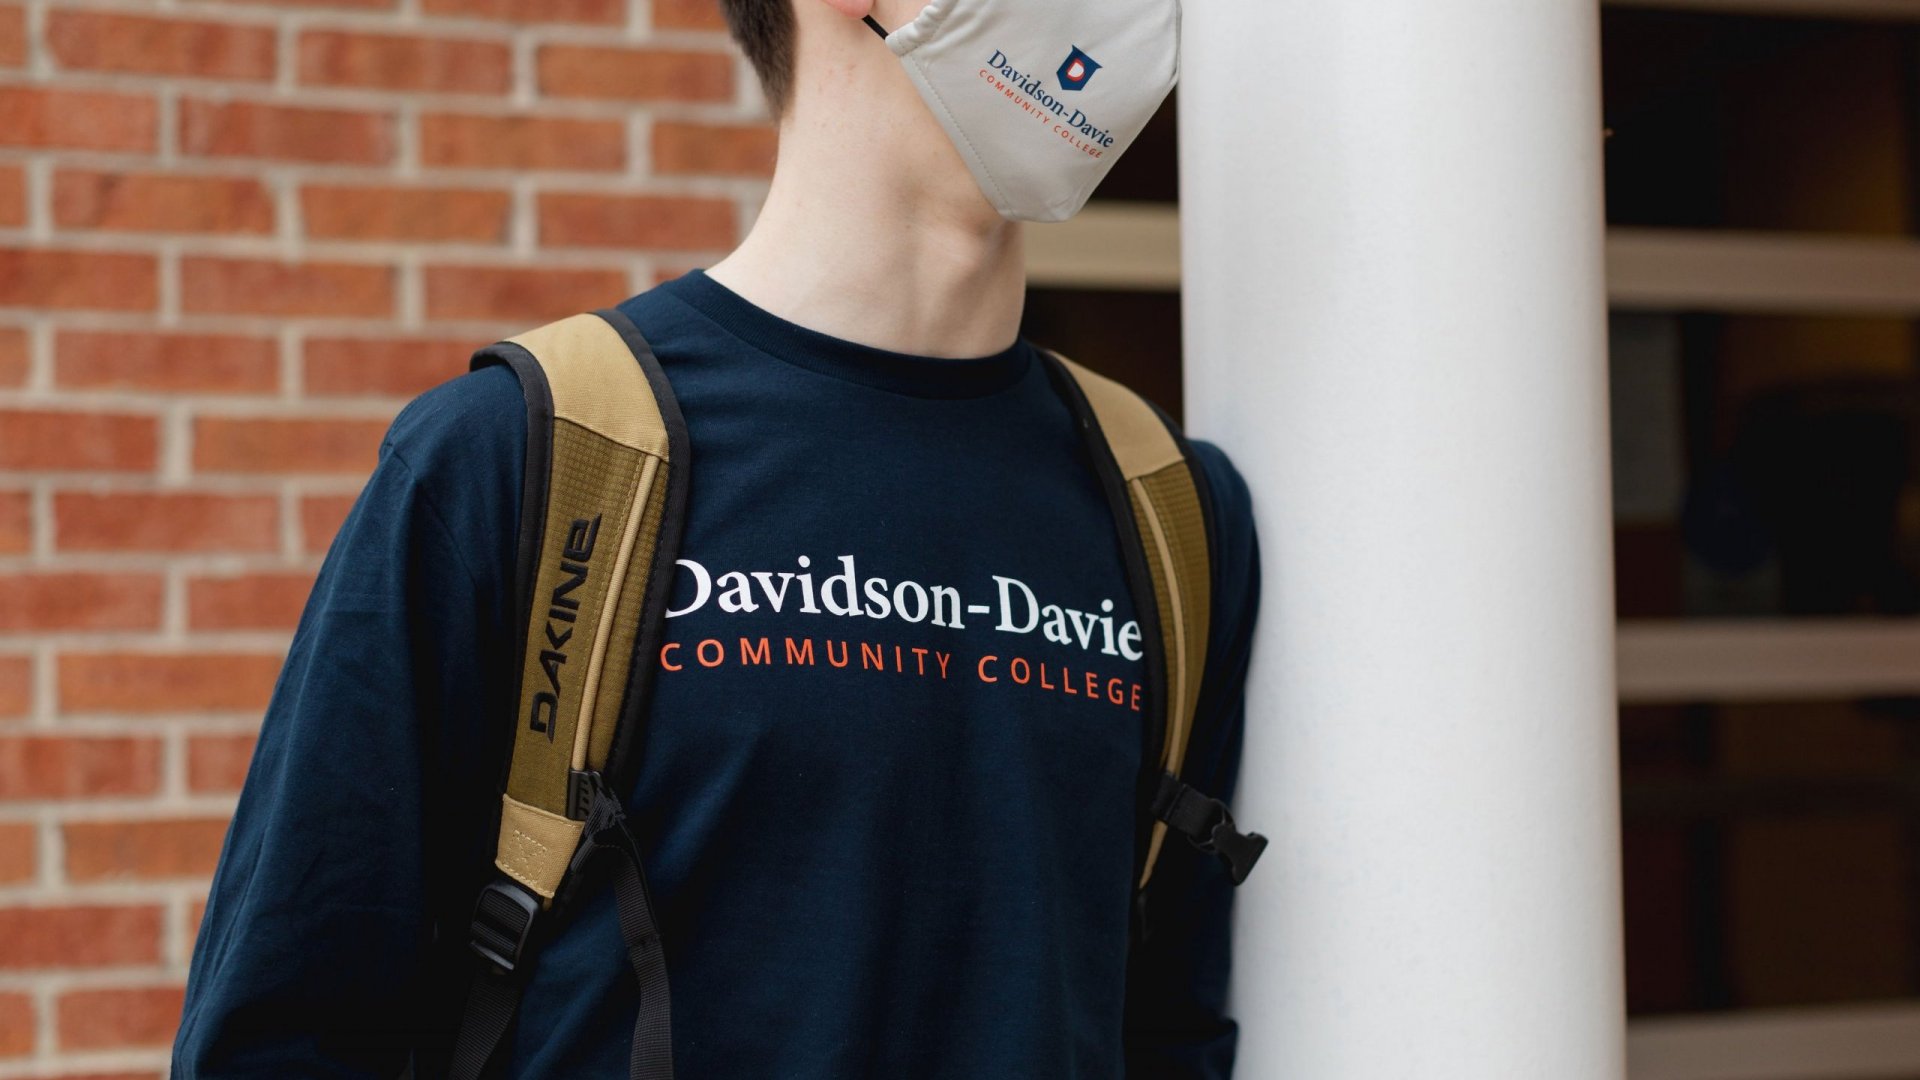 DCCC is now Davidson-Davie Community College